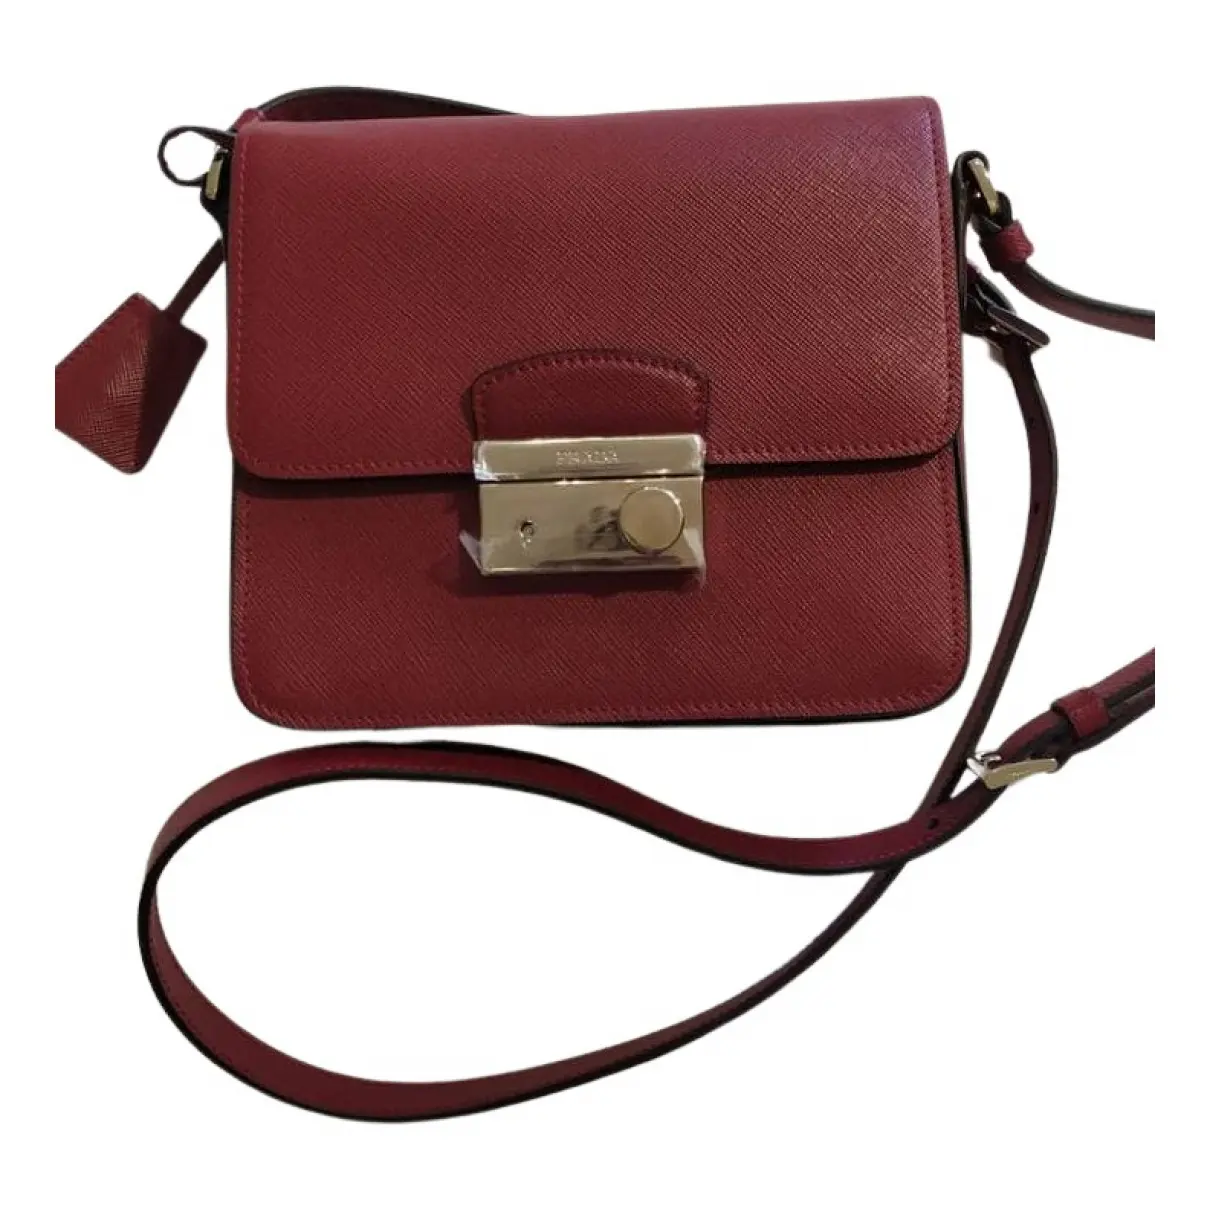 Sound leather handbag Prada